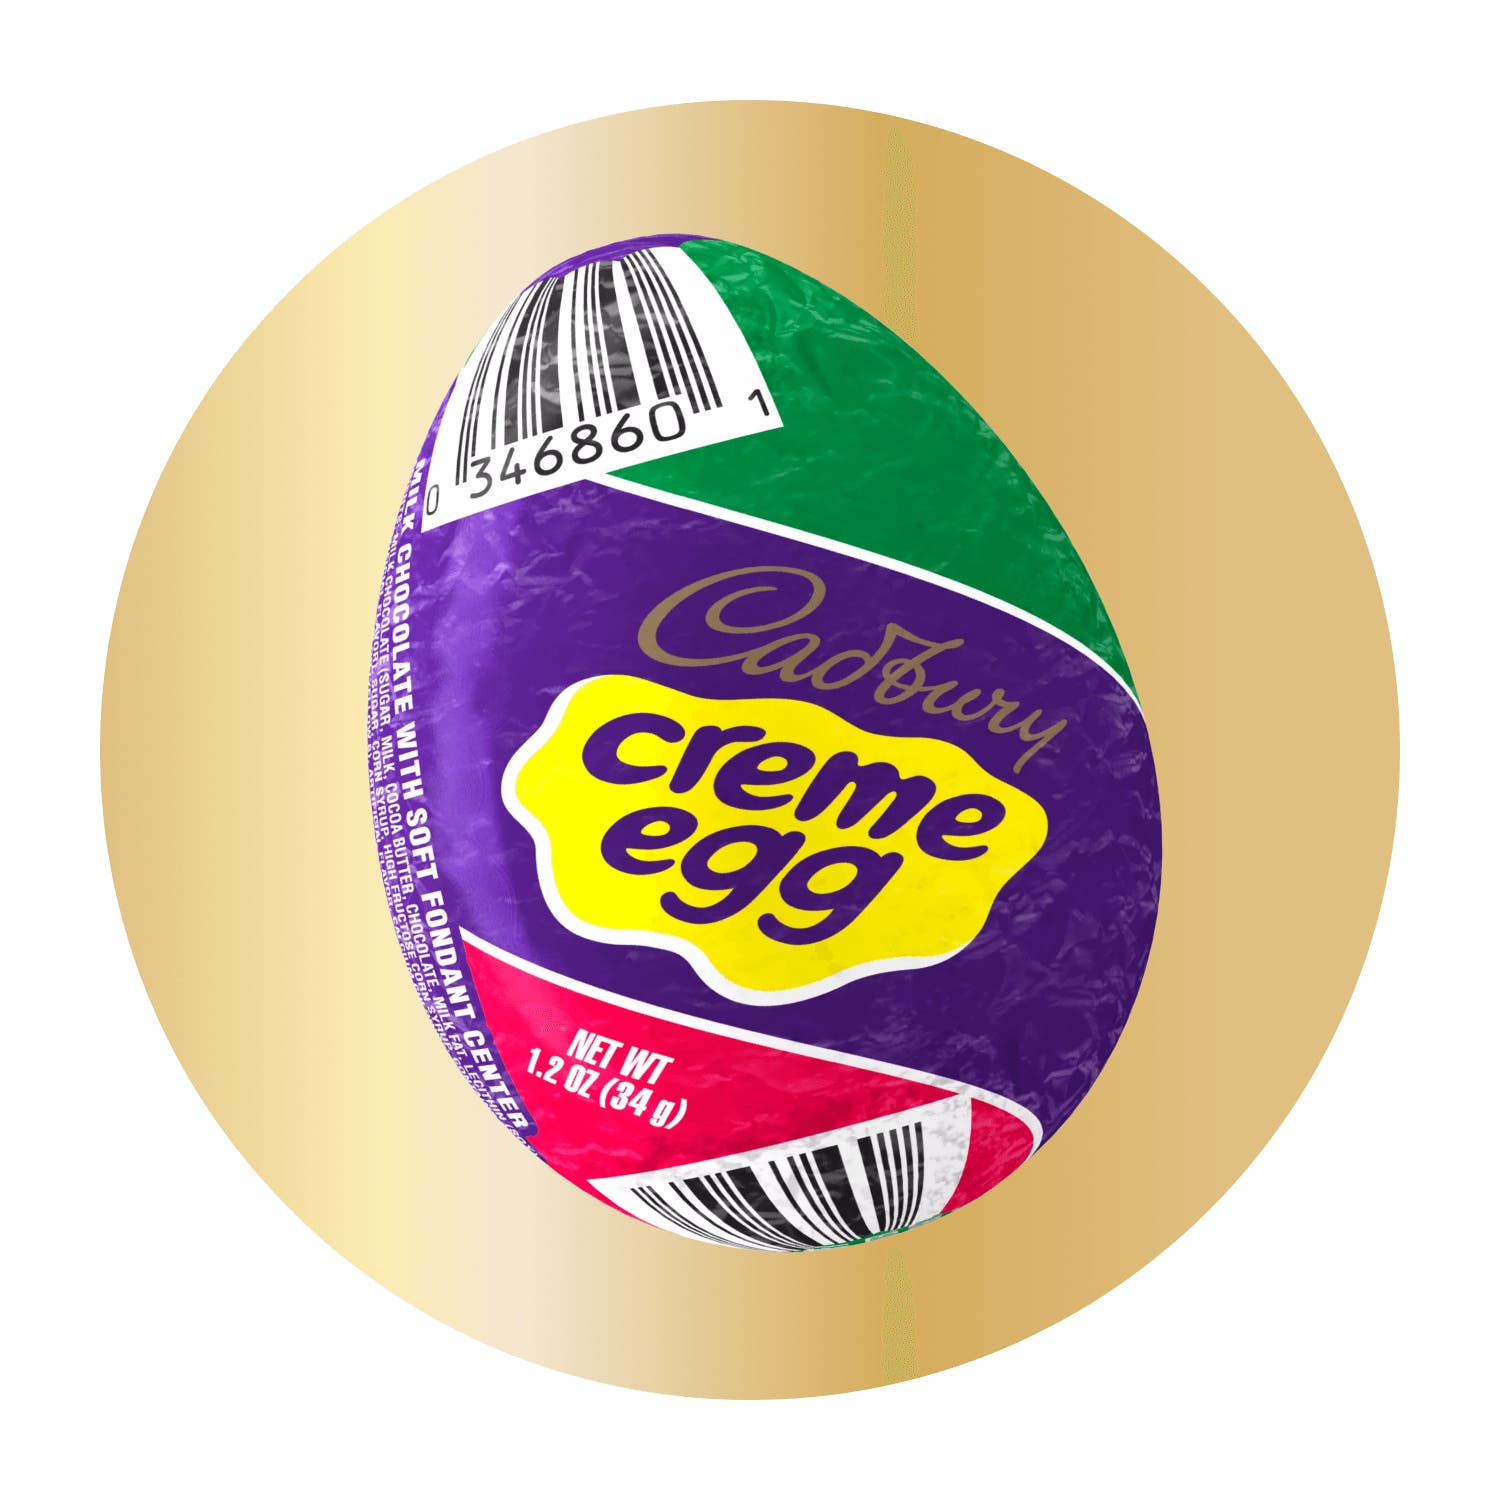 wrapped cadbury creme egg